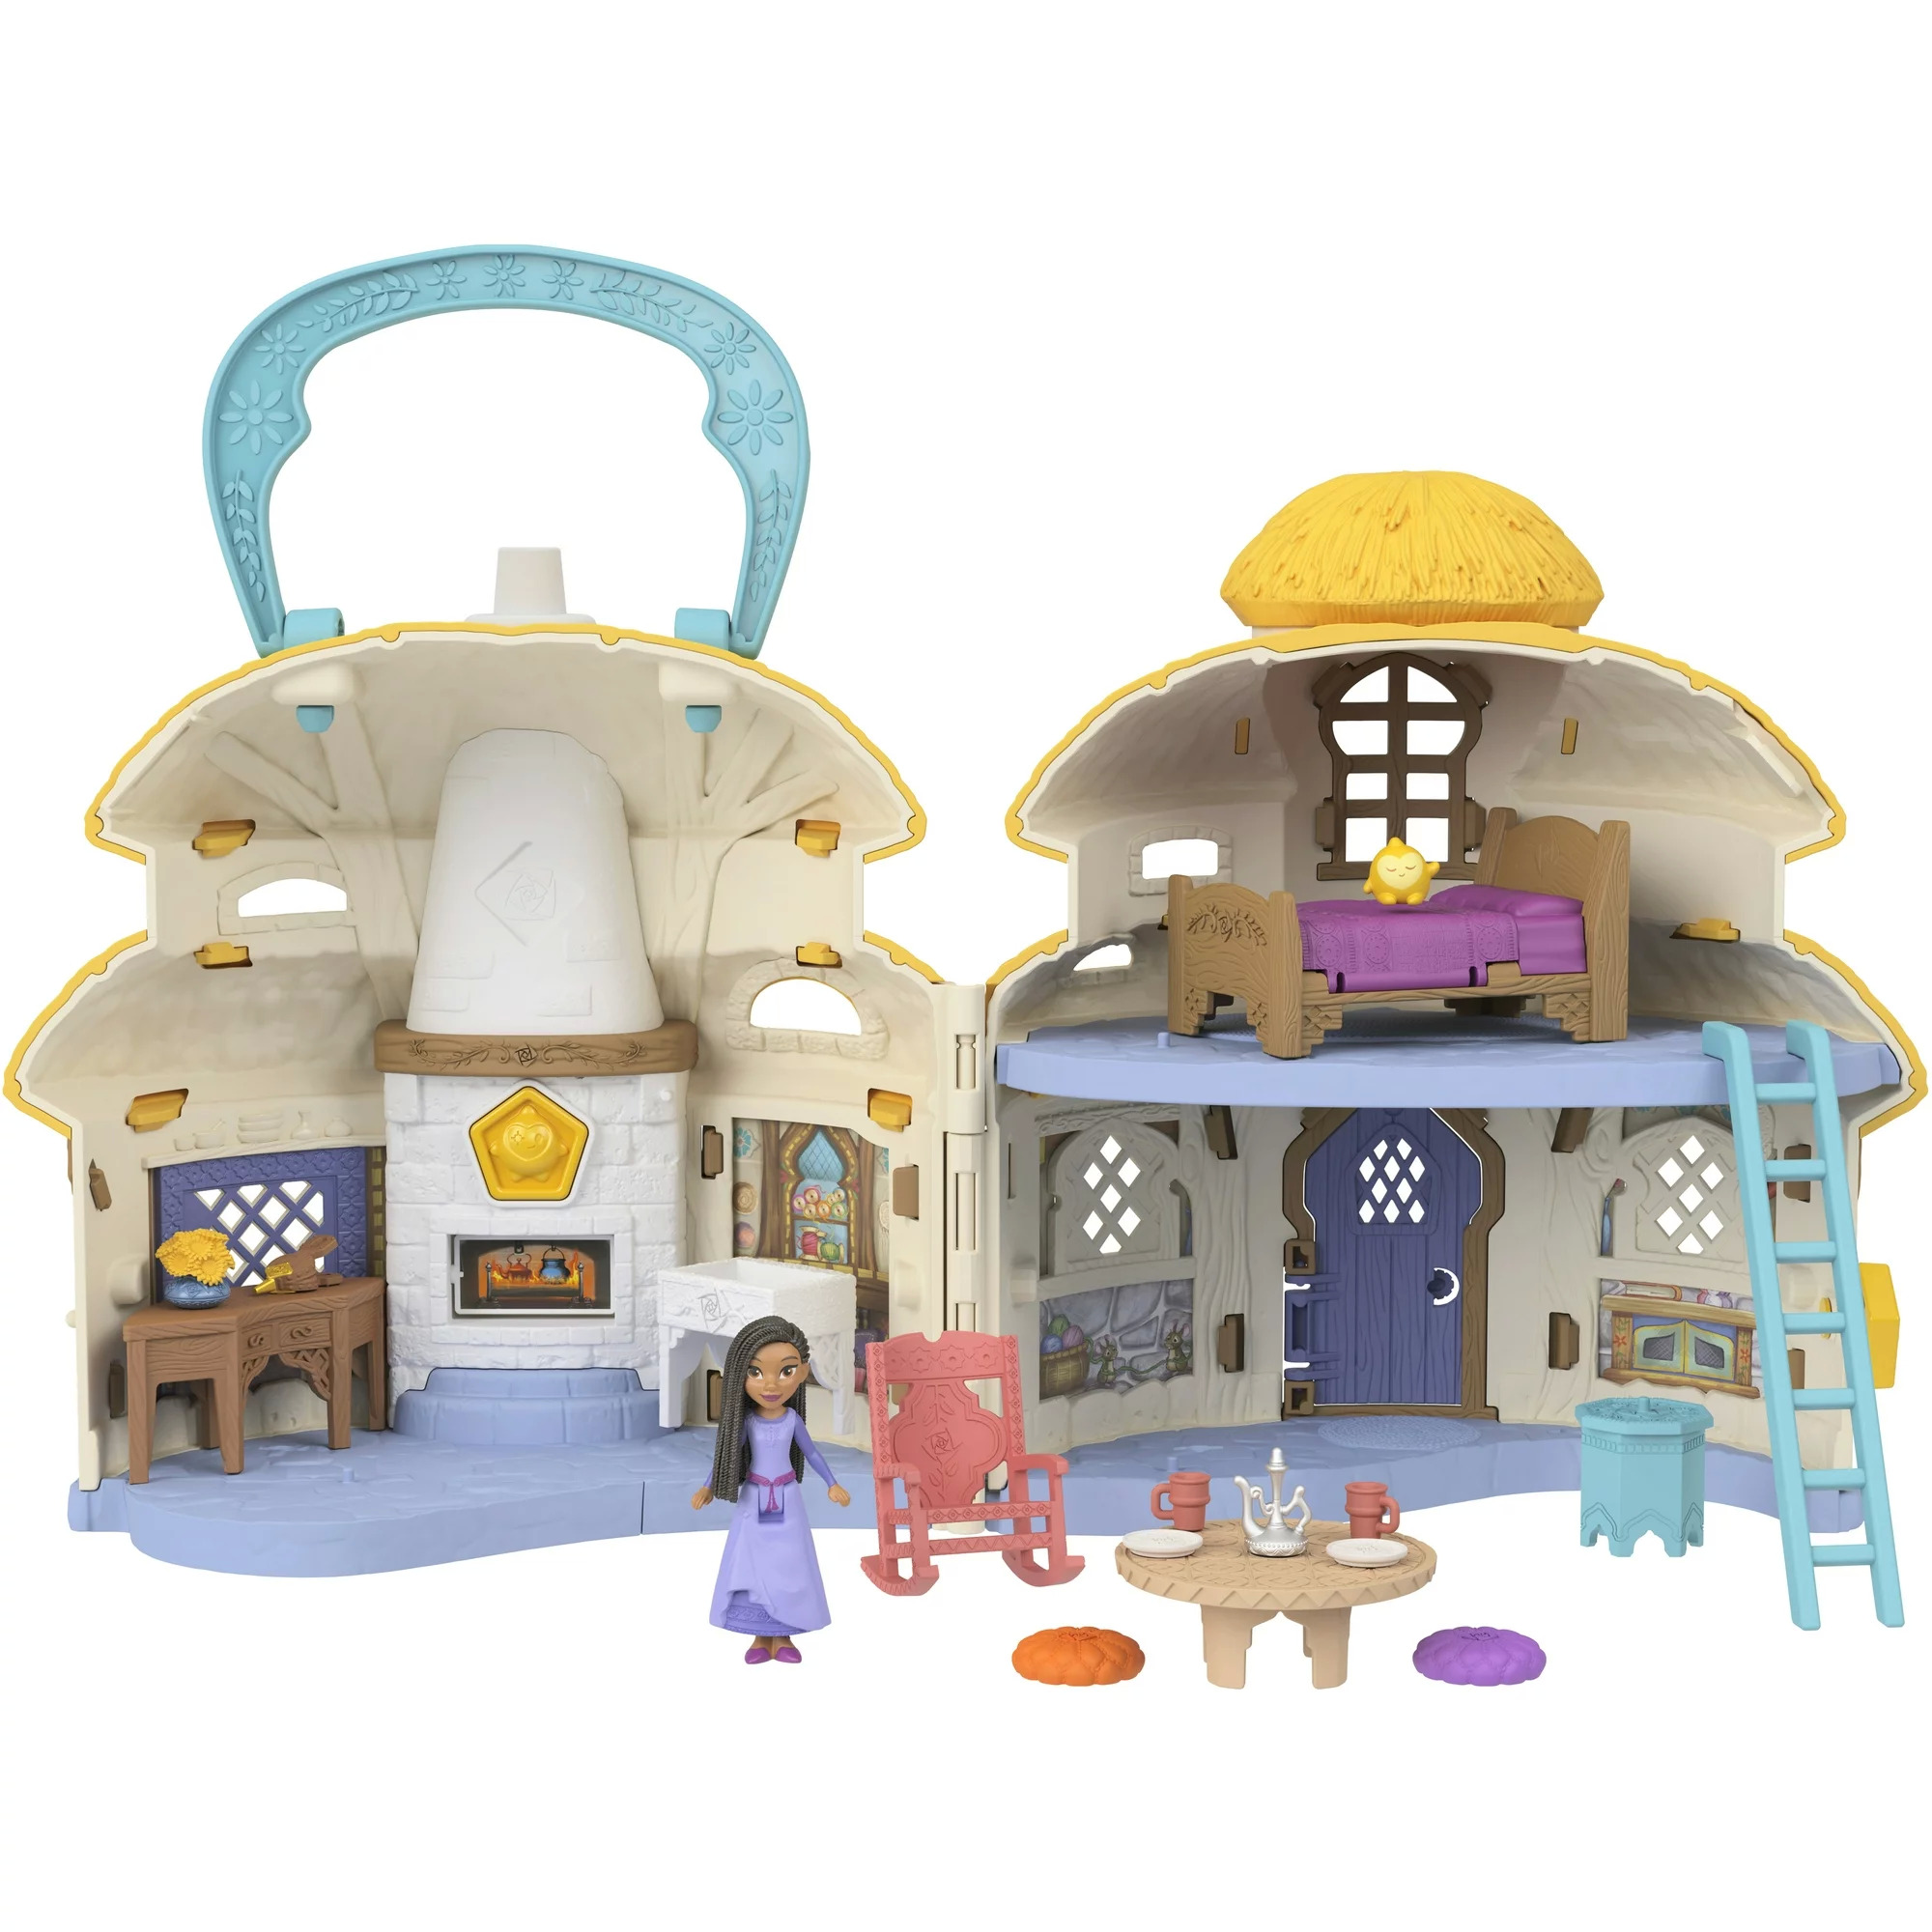 Disney Wish Cottage Home Playset $5.08 & Mattel Disney Wish Rosas Castle Dollhouse Playset $13.90 + Free Shipping w/ Walmart+ or $35+